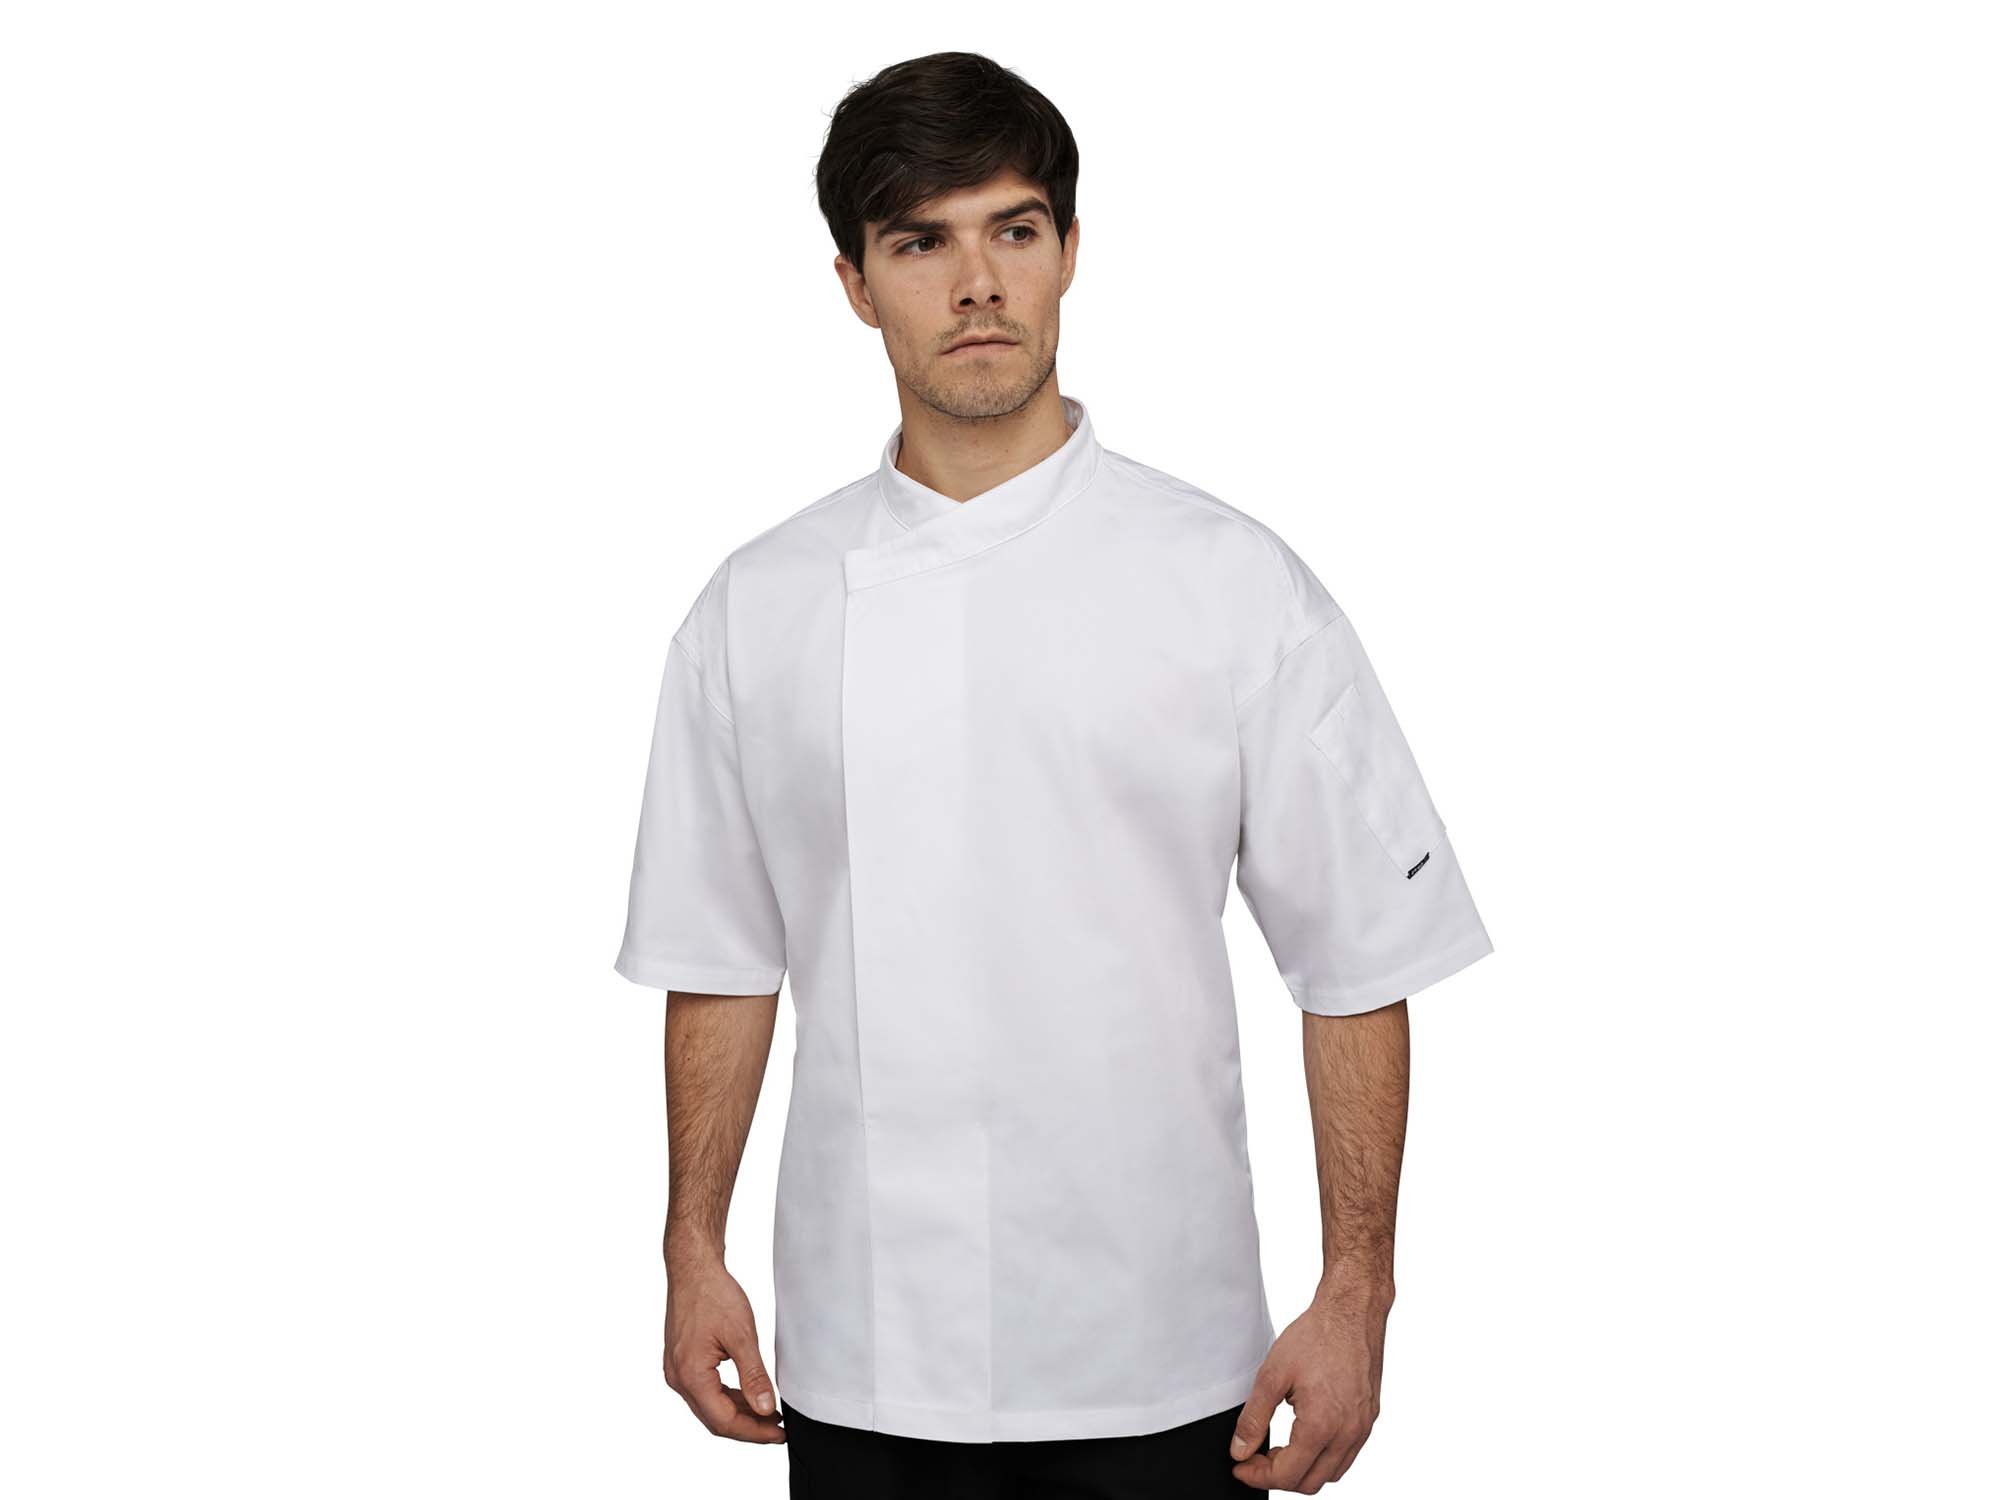 Le Chef Men's Professional Executive Chefs Shirt Tunic RED TRIM DA25 